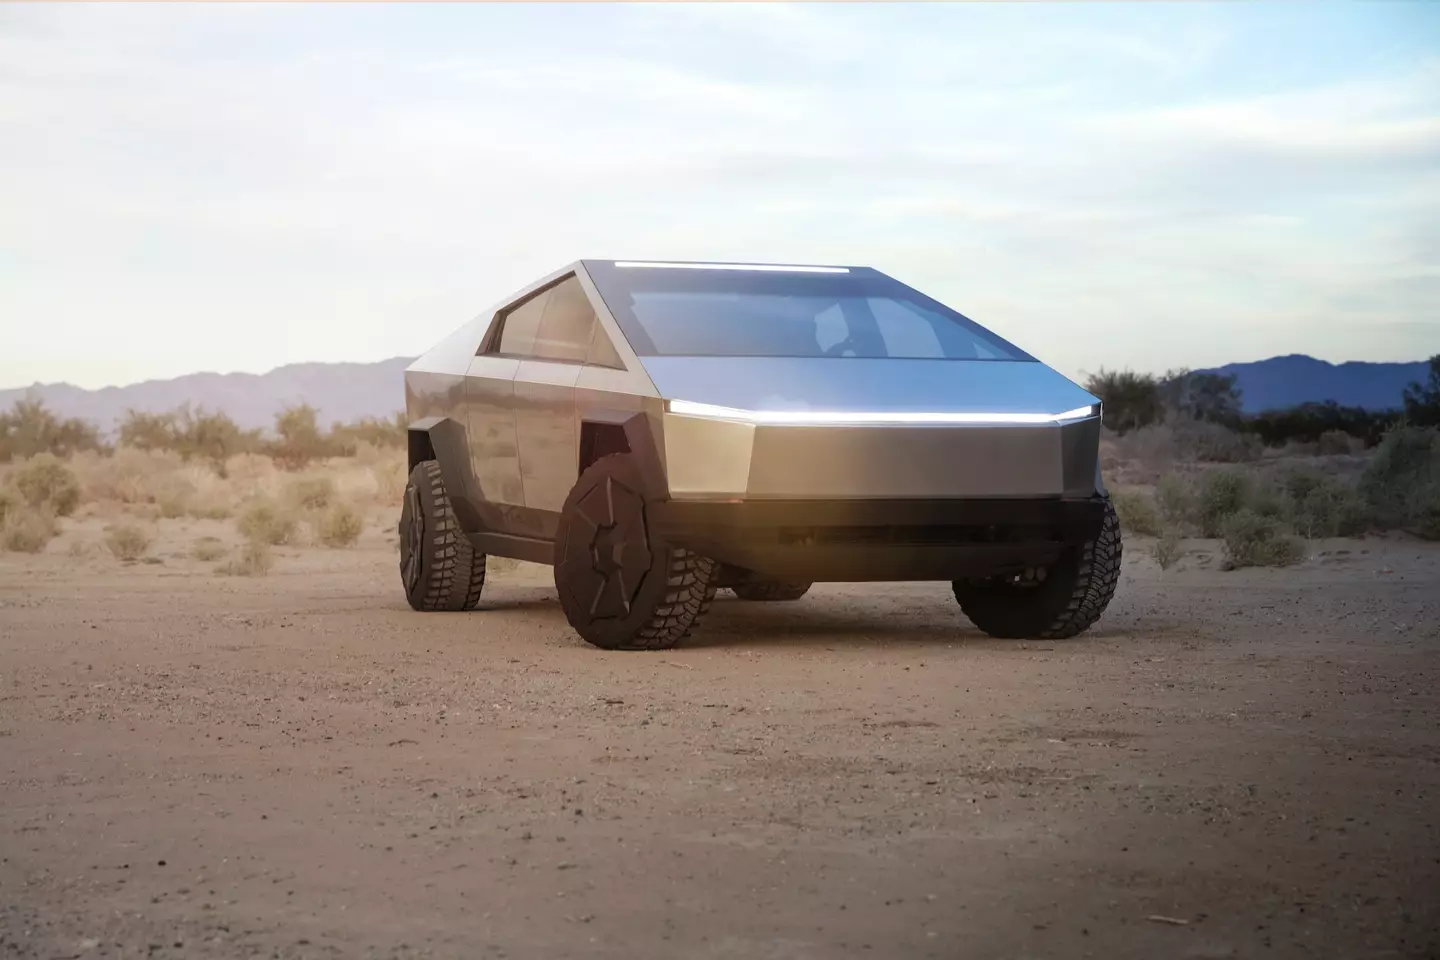 Tesla's Cybertrucks were inspired by films like Blade Runner, Elon Musk has previously said.